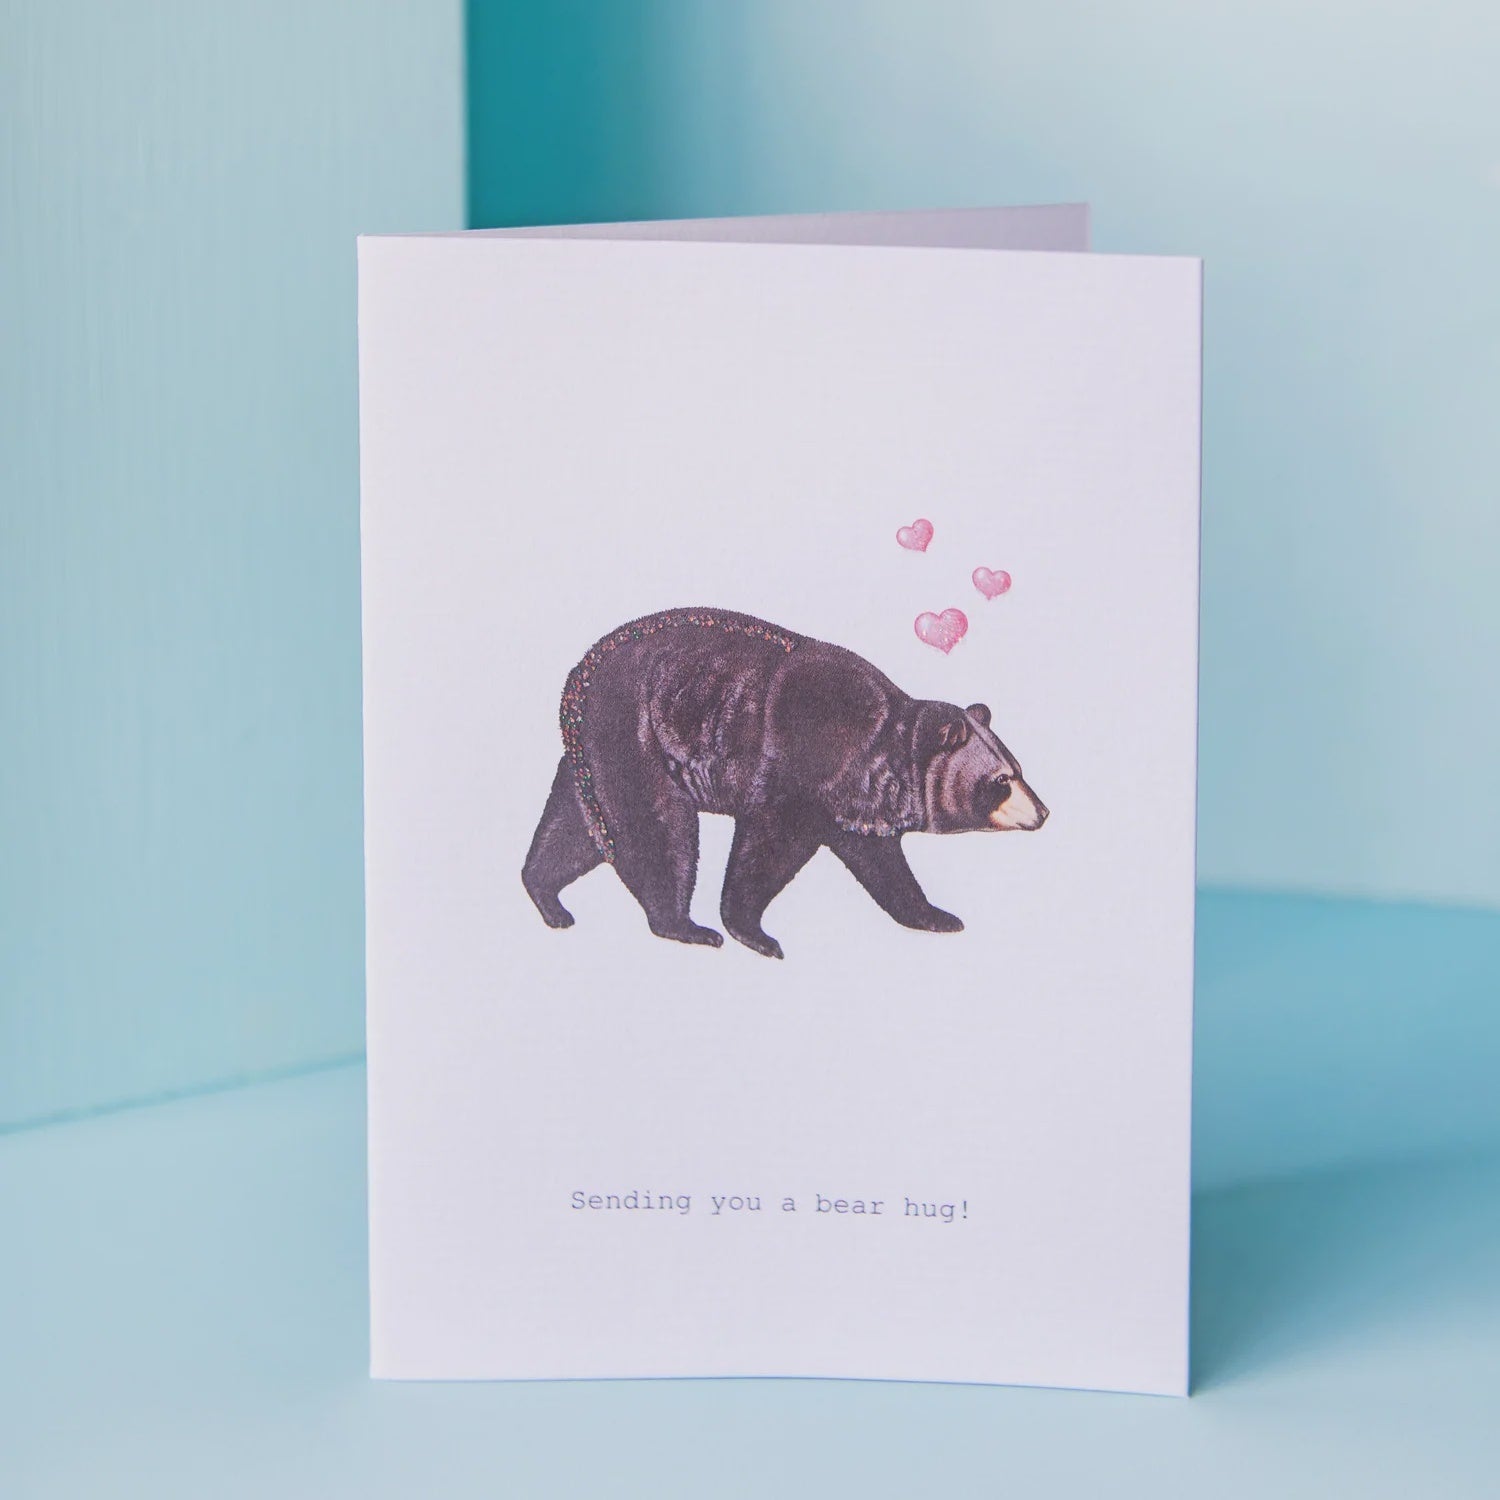 Bear Hug Greeting Card